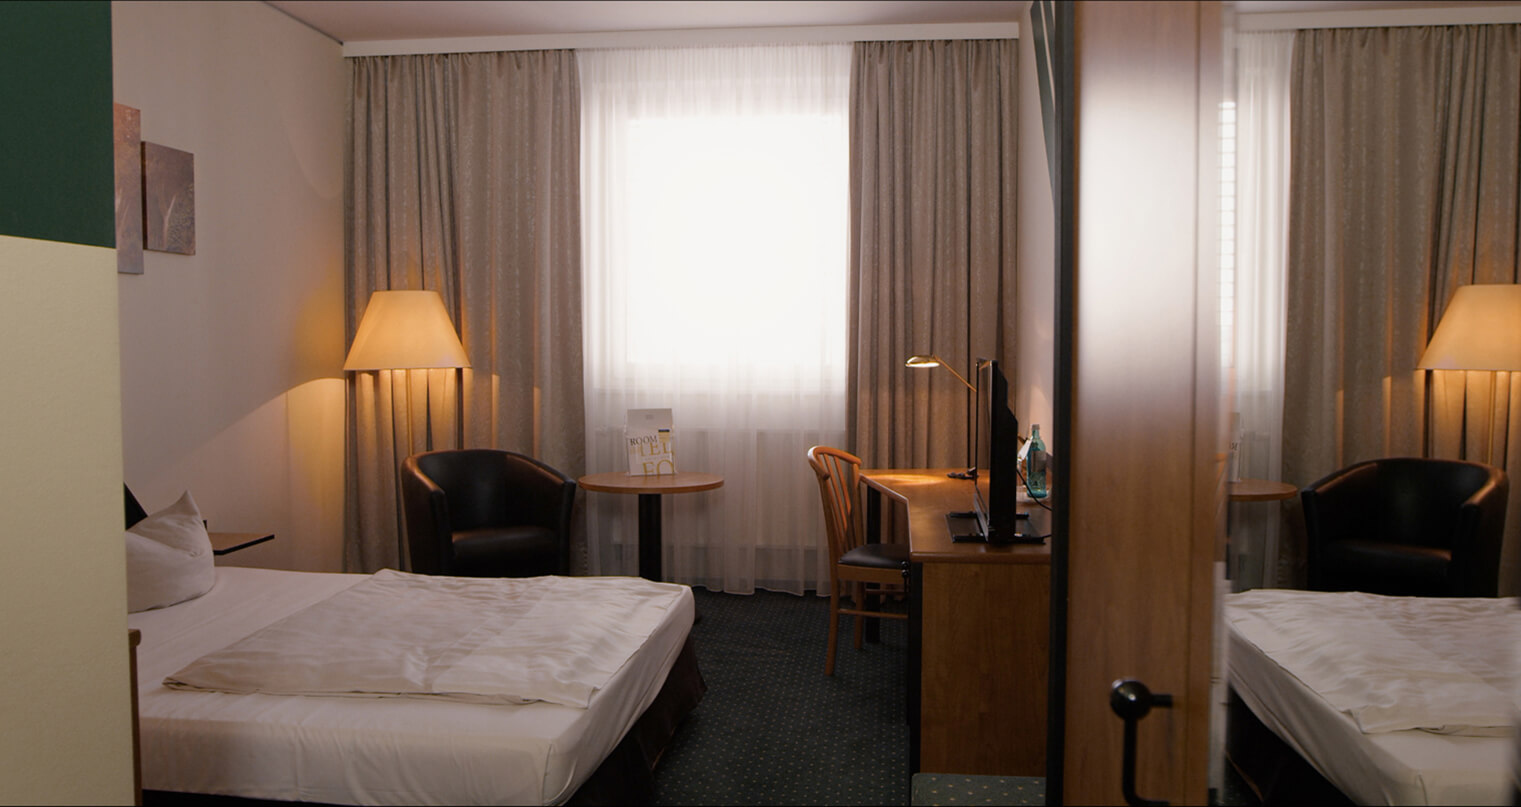 Komplette Hoteleinrichtung im Zimmer bekleben Novina Hotel Südwestpark Nürnberg W945 vorher